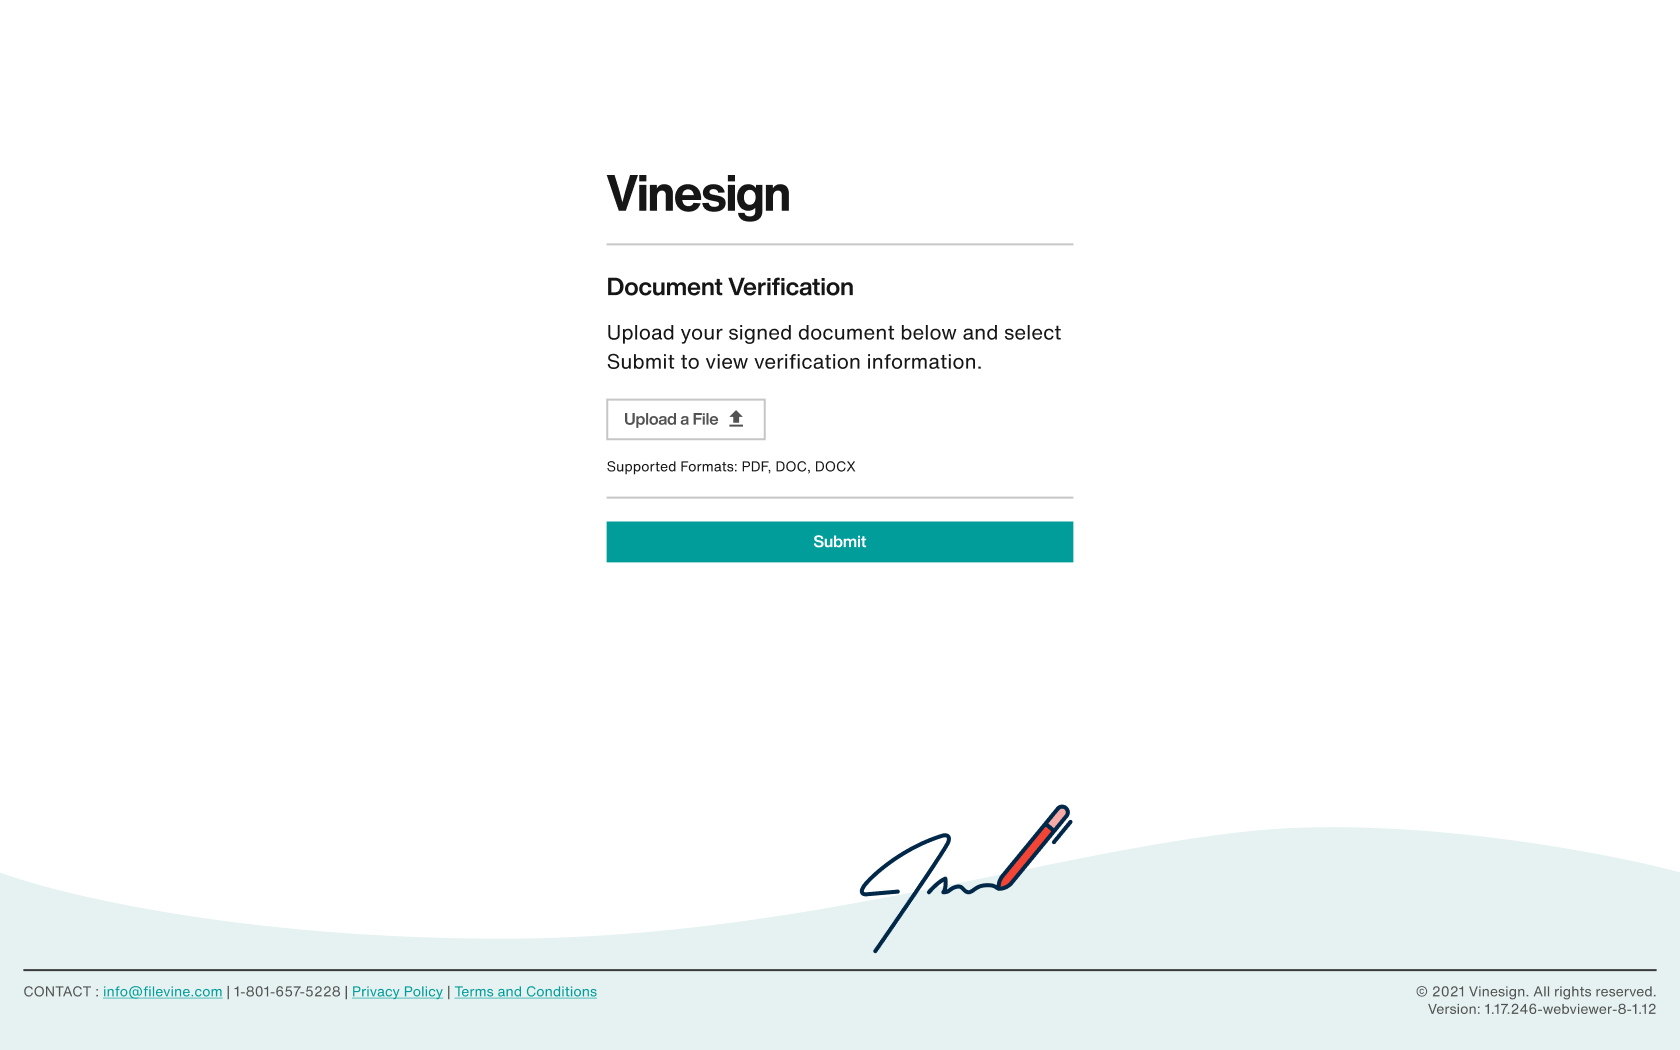 Document Verification in Vinesign